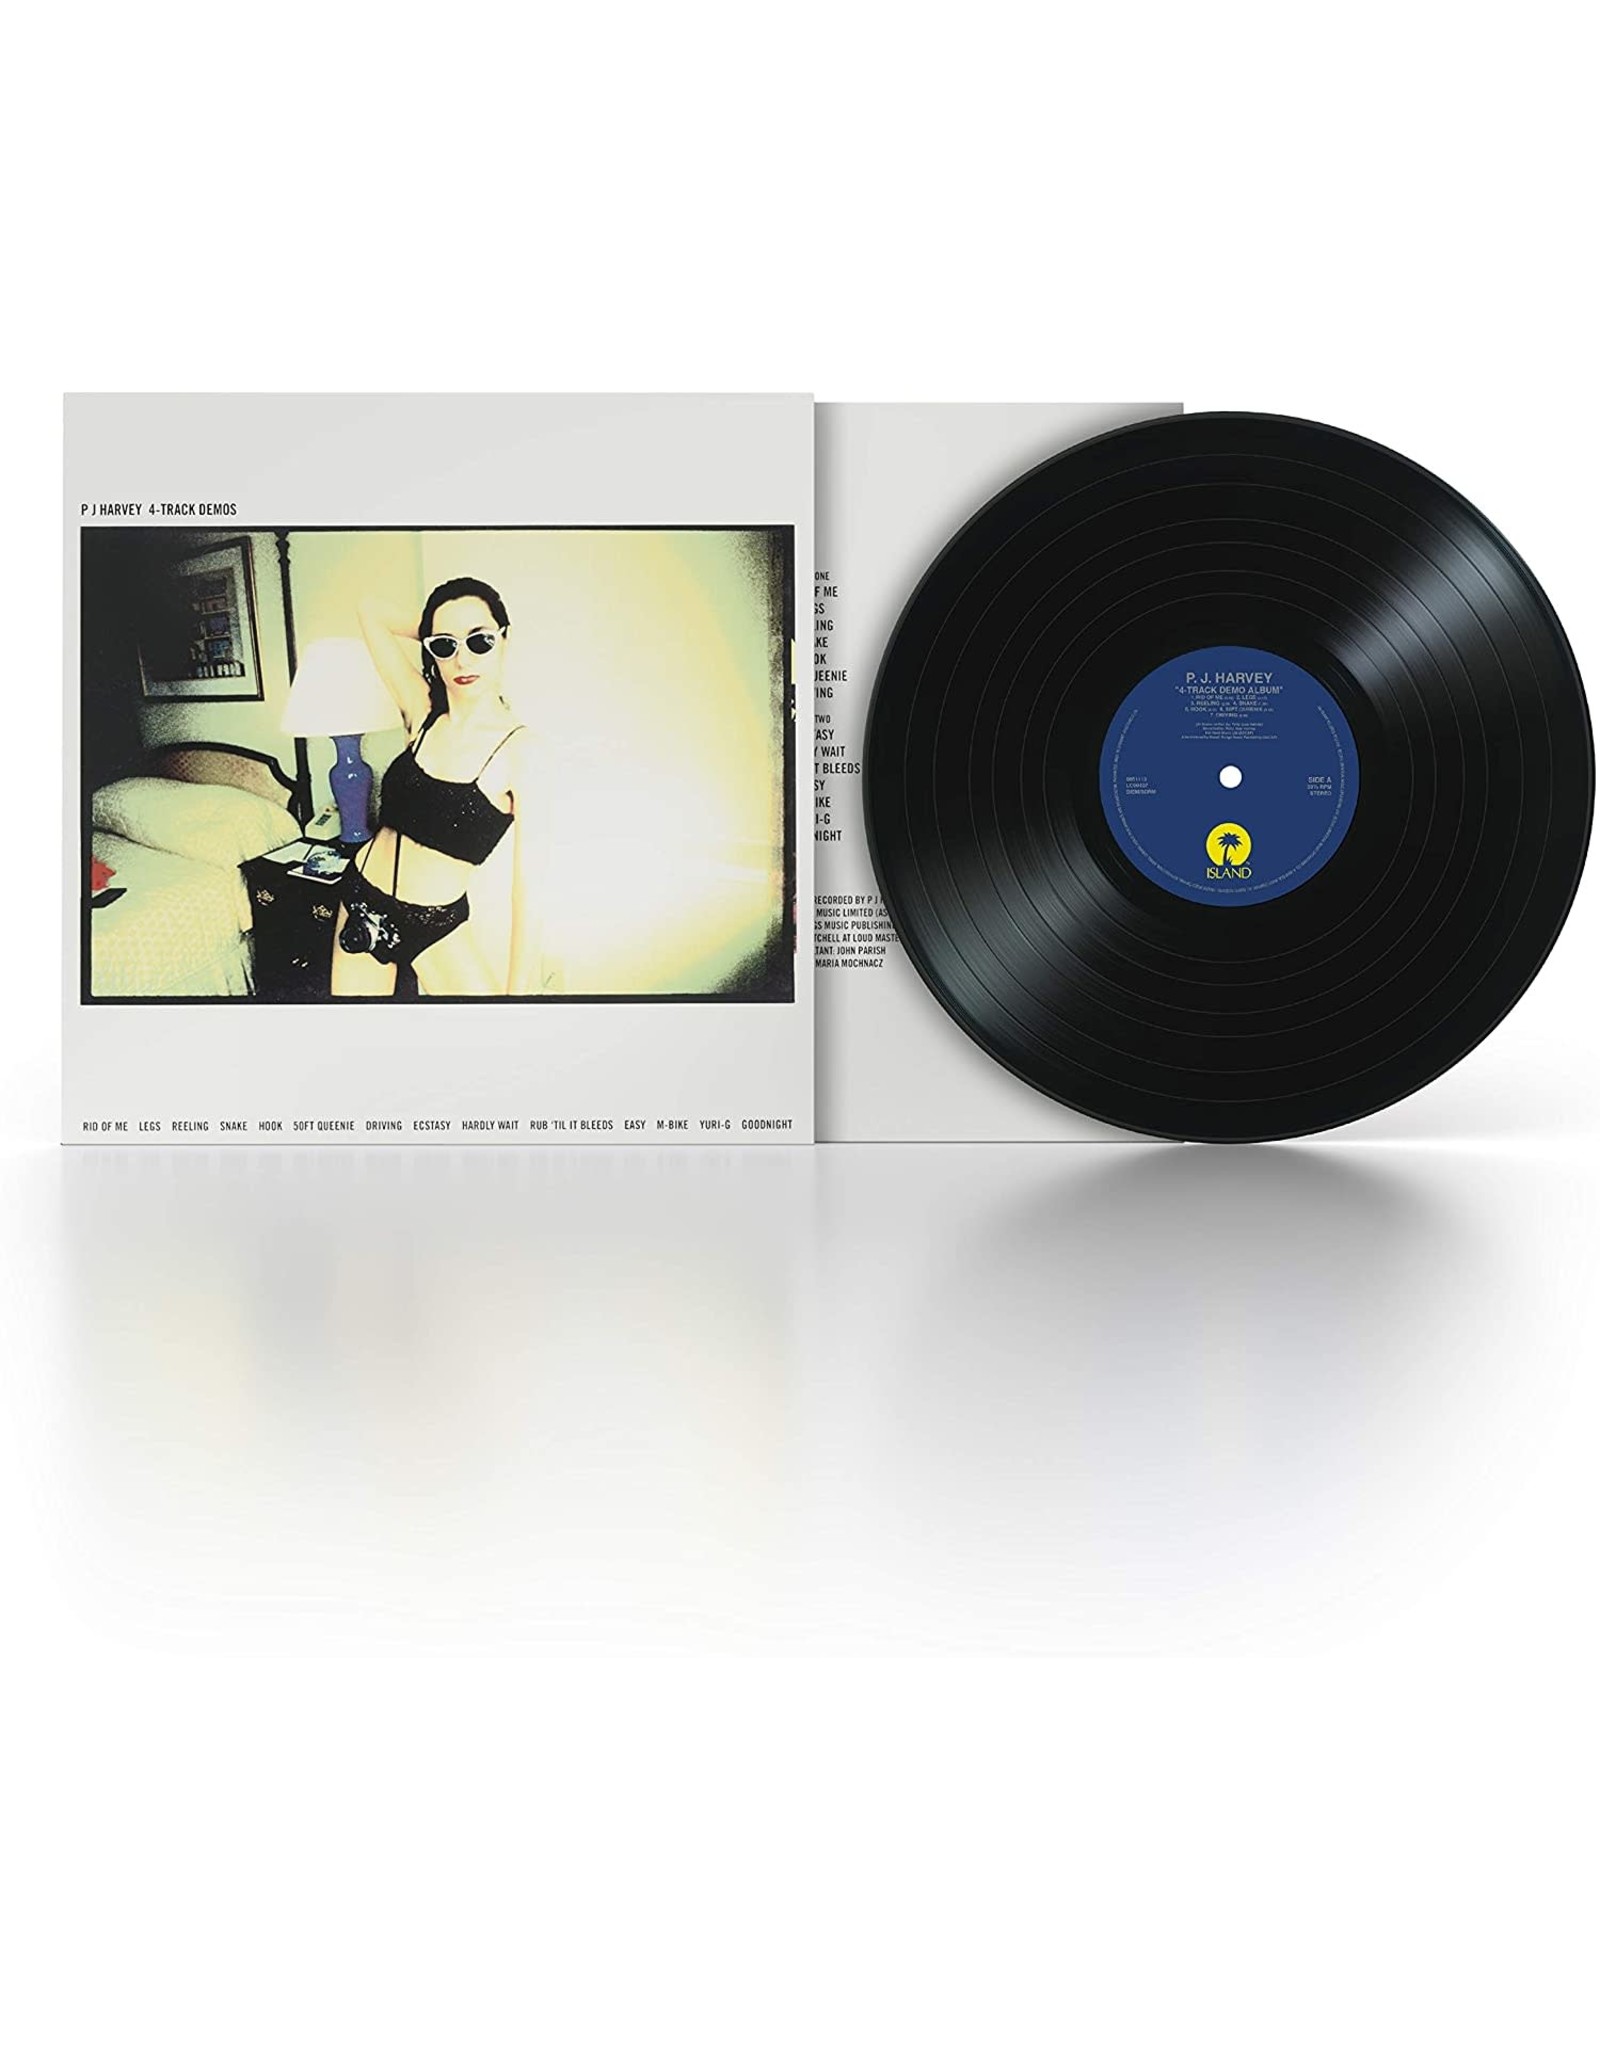 PJ Harvey - 4-Track Demos